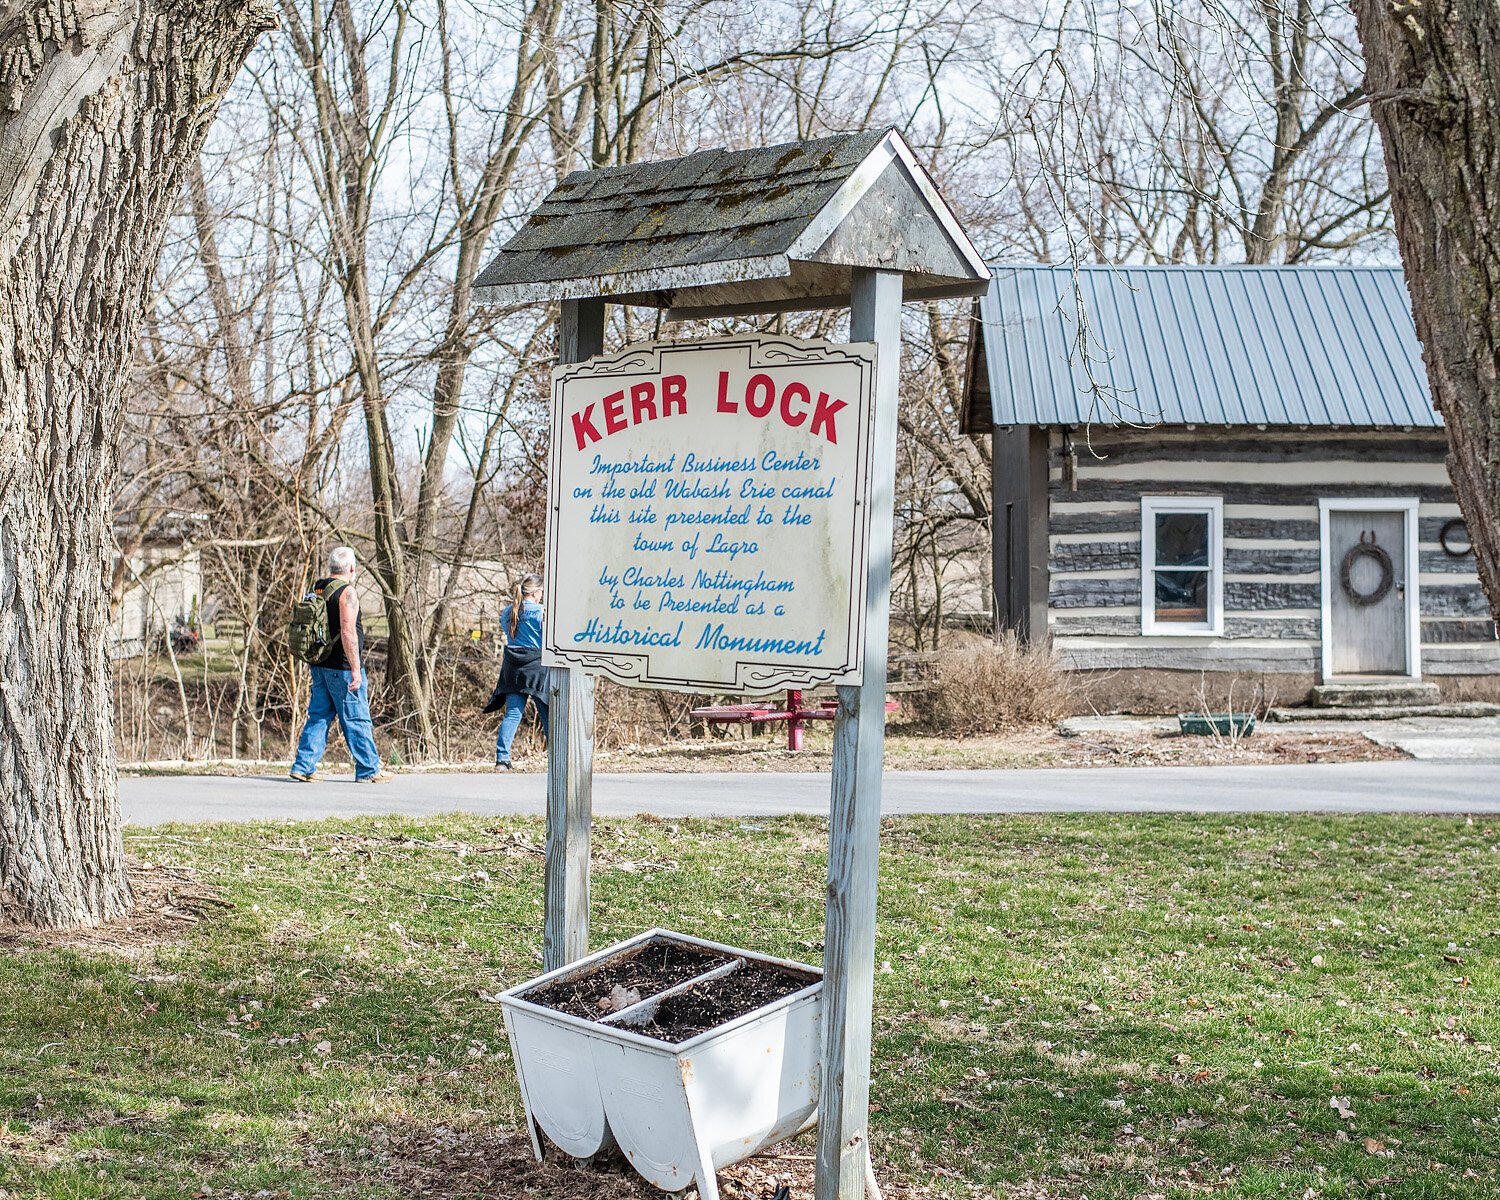 The Kerr Lock